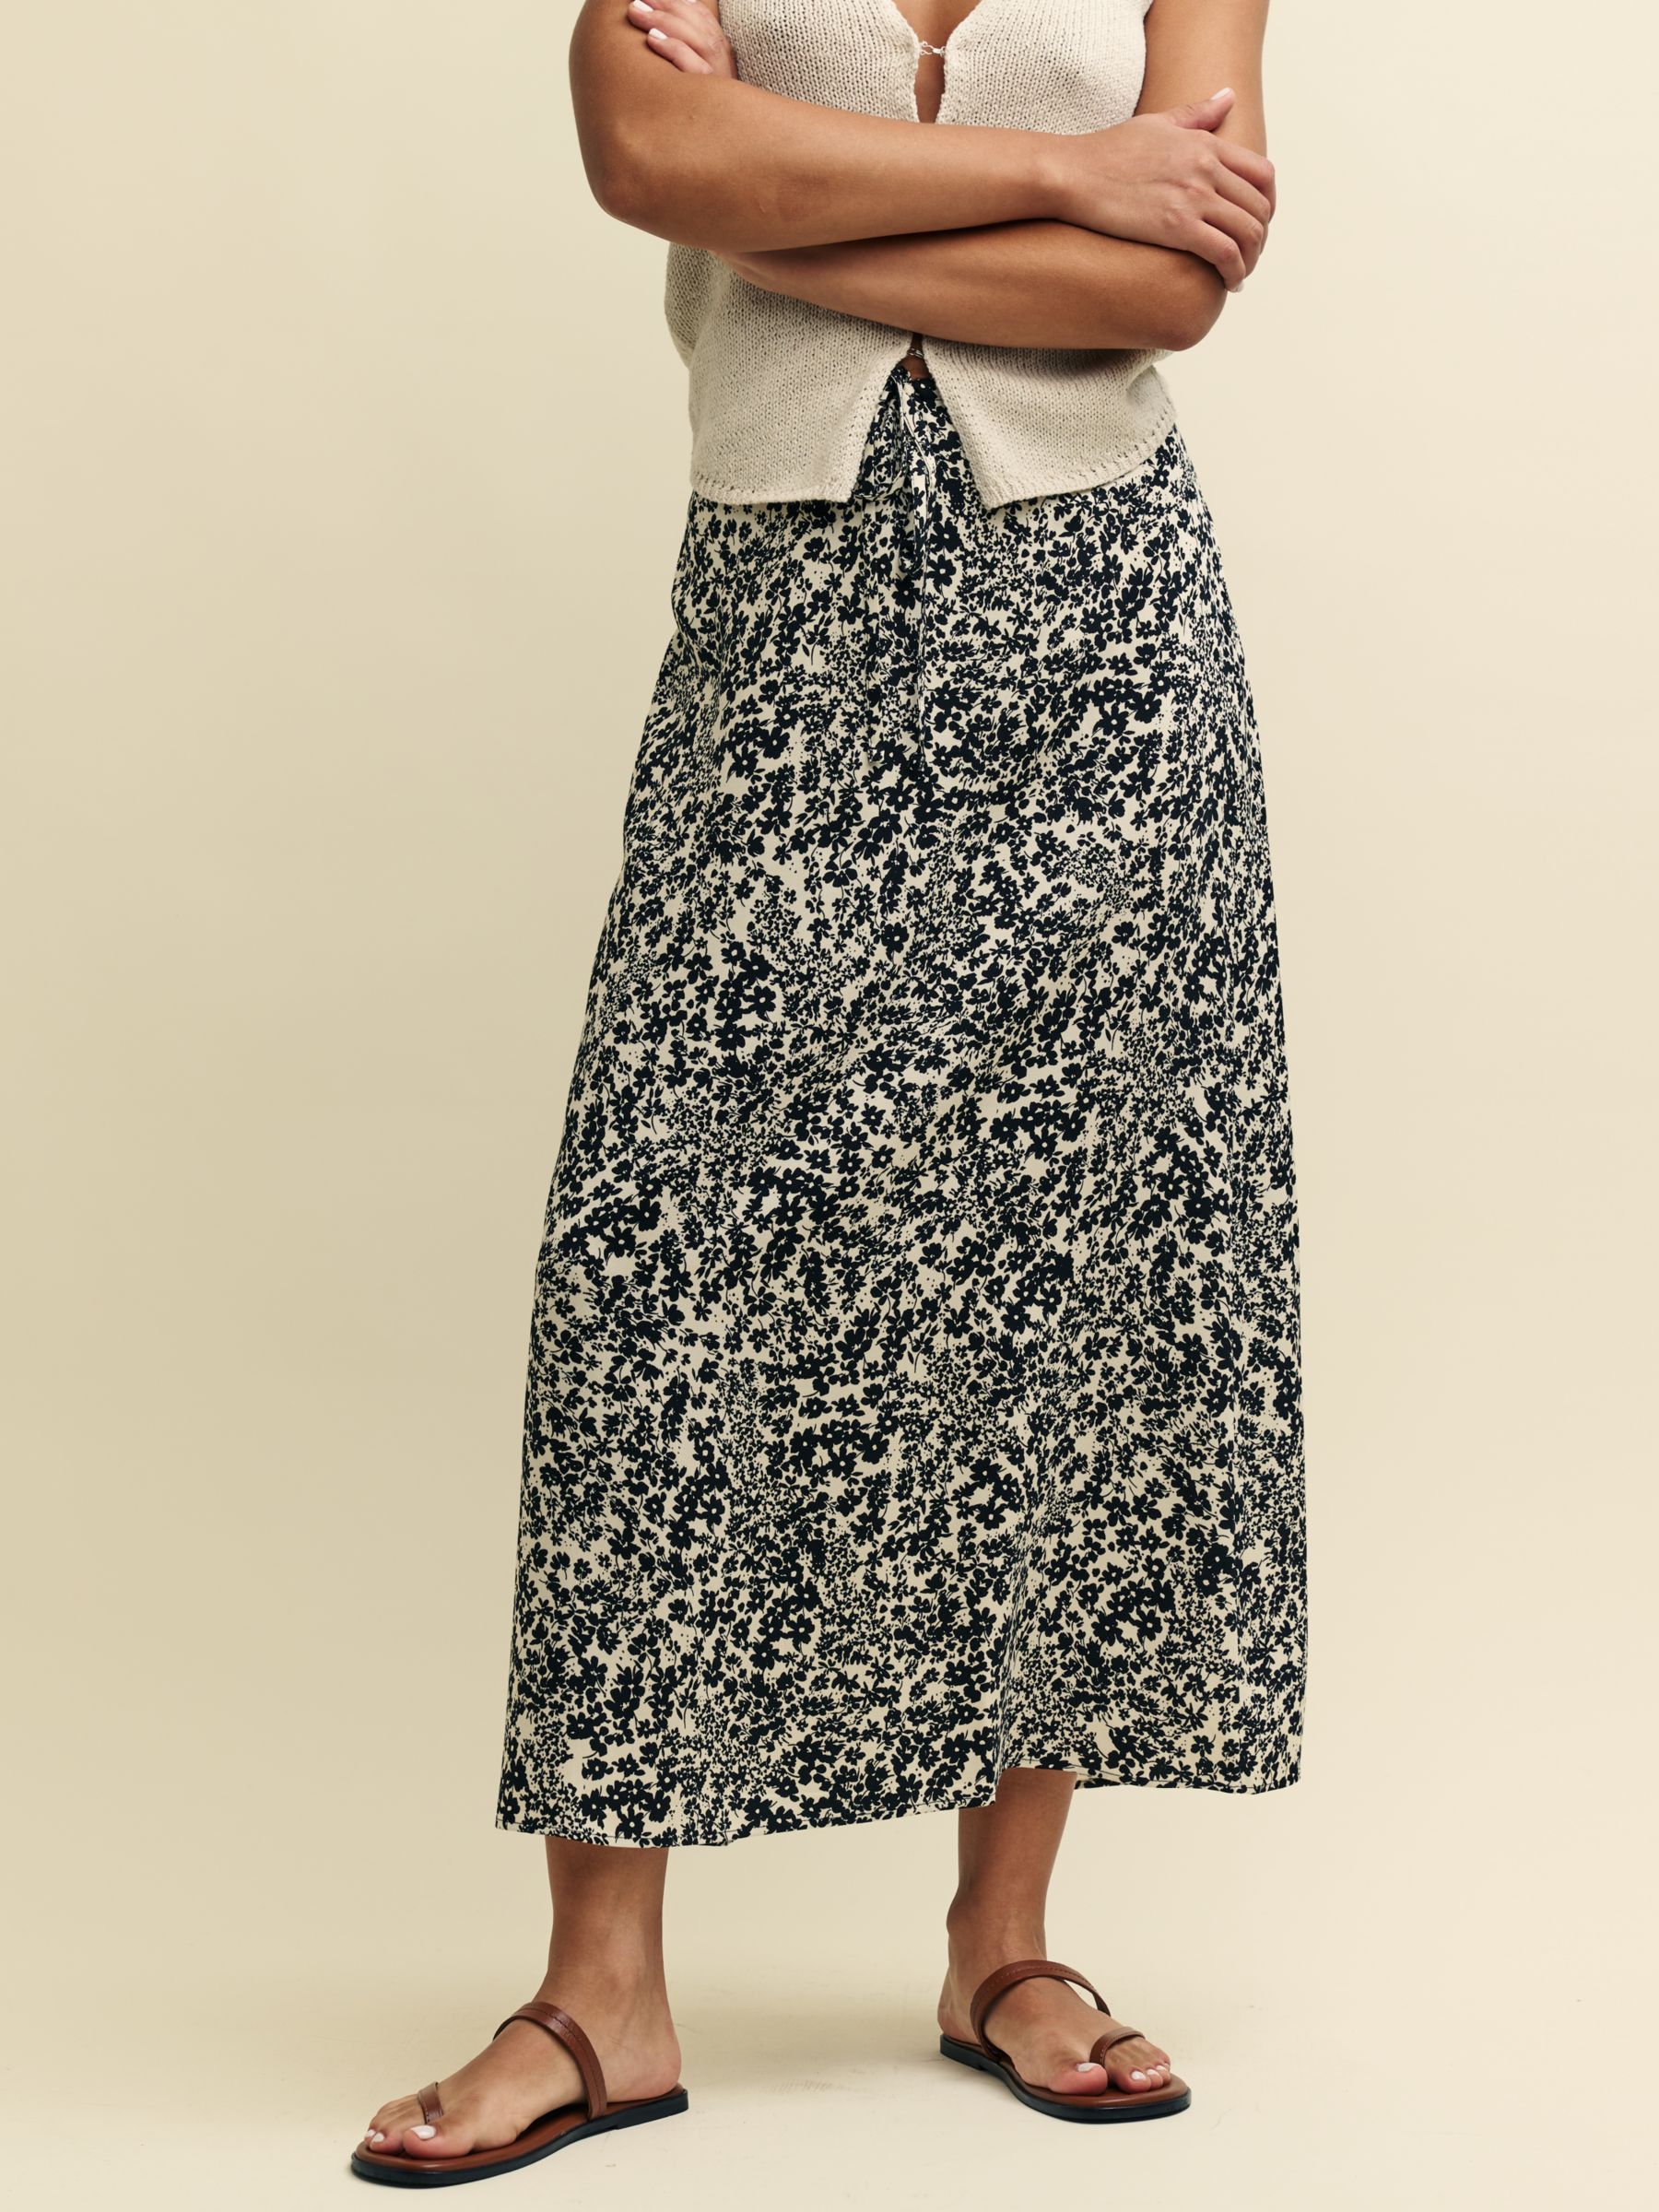 Nobody's Child Petite Monie Leopard Ditsy Print Midaxi Skirt, Black/Multi, 6